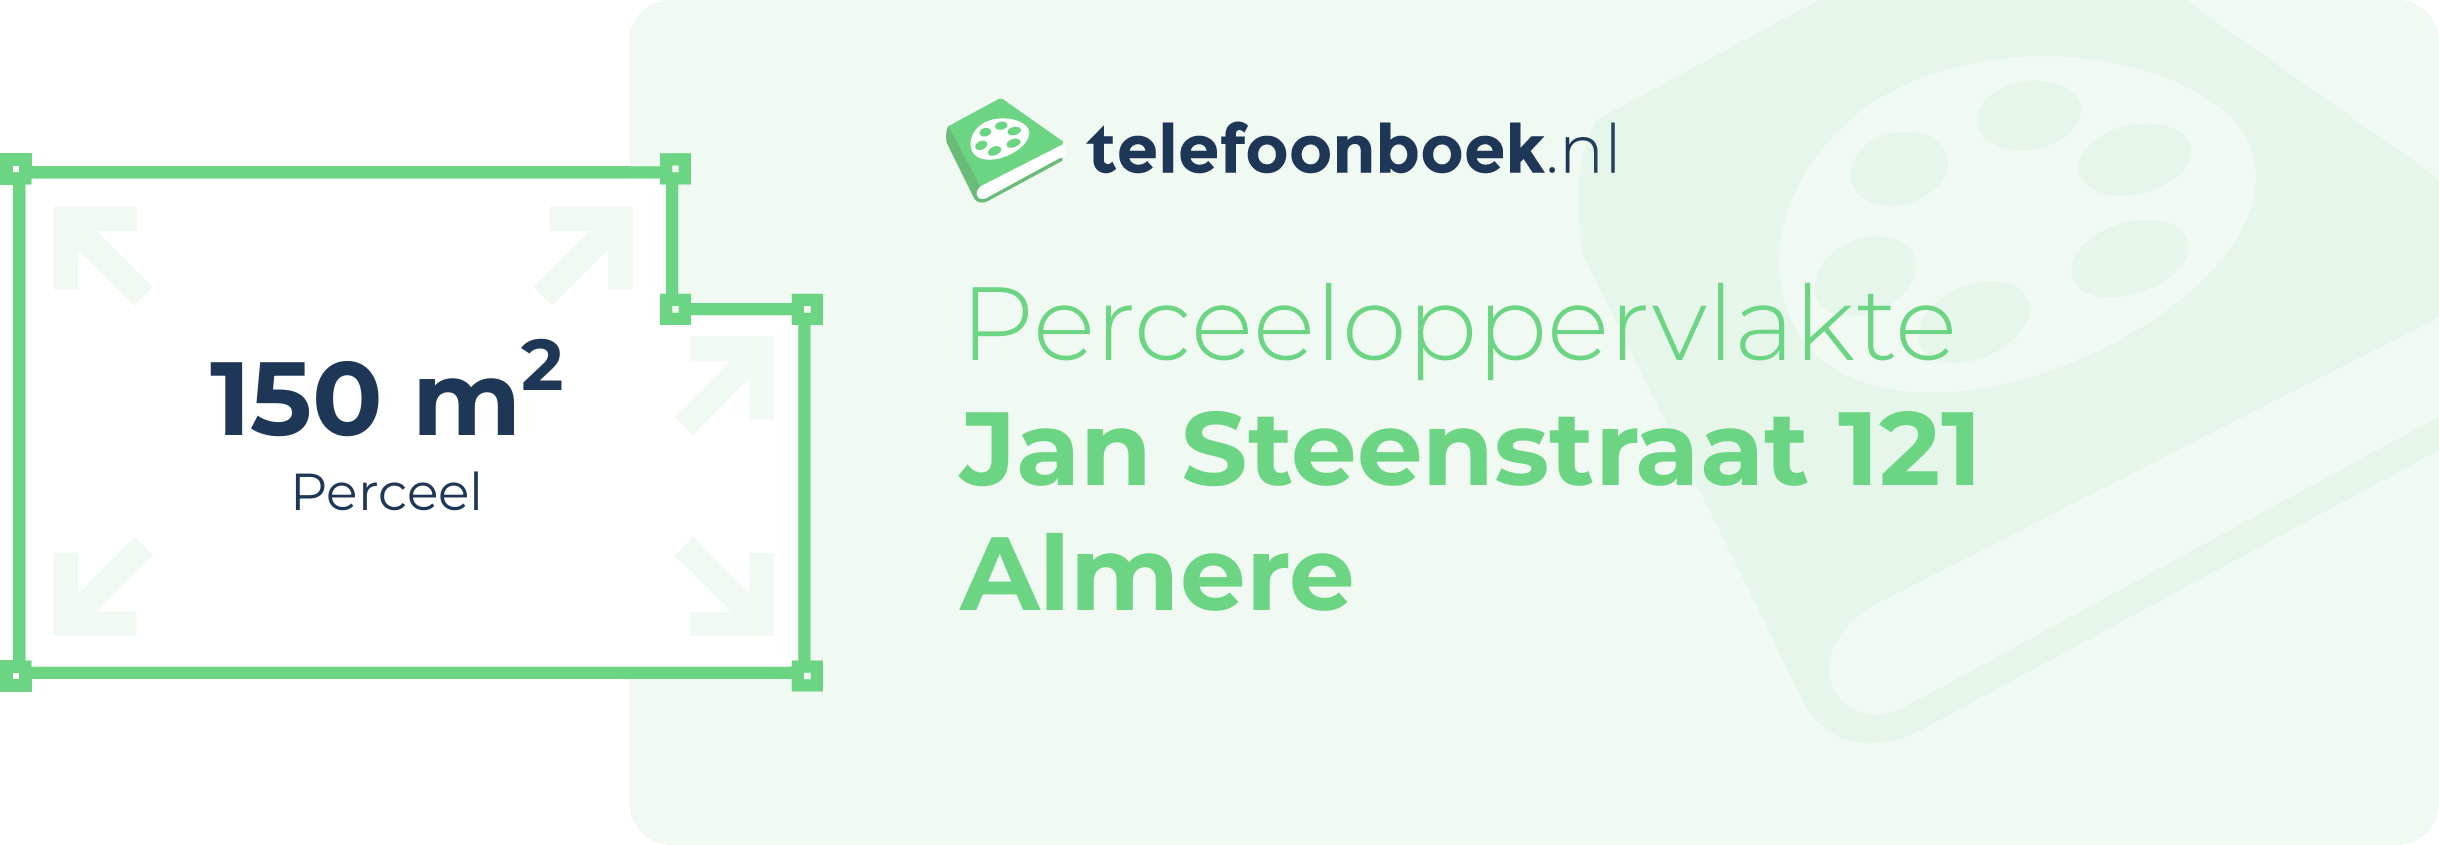 Perceeloppervlakte Jan Steenstraat 121 Almere